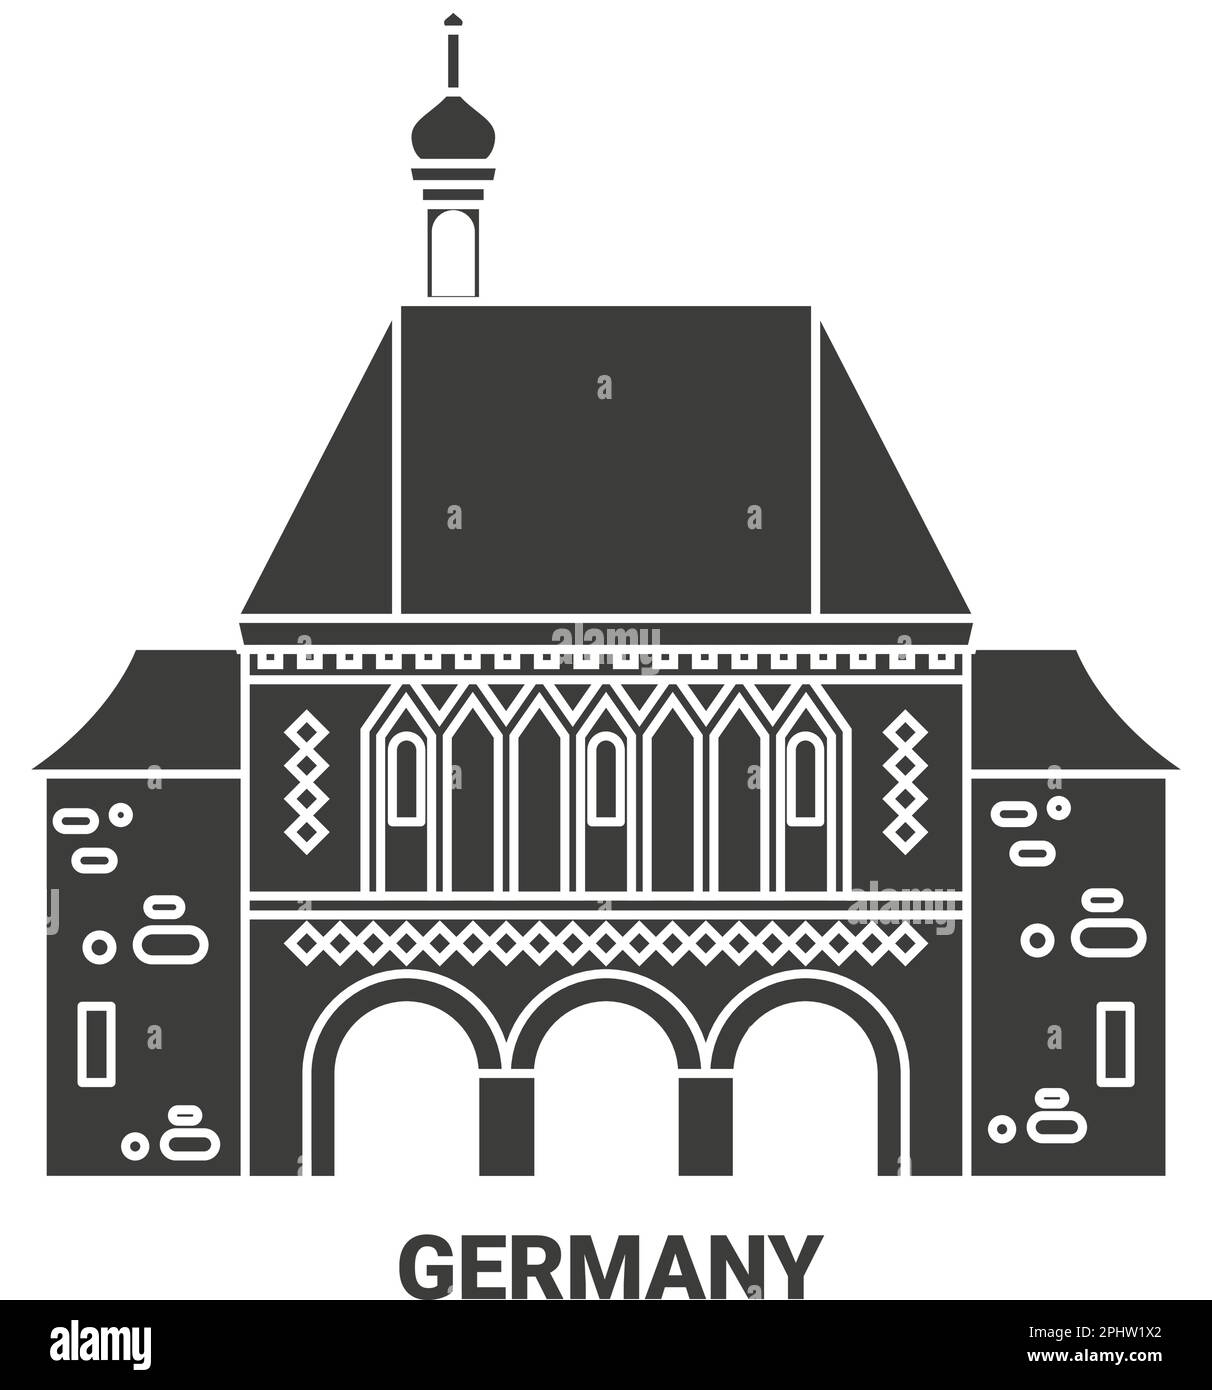 Germany travel landmark vector illustration Stock Vector